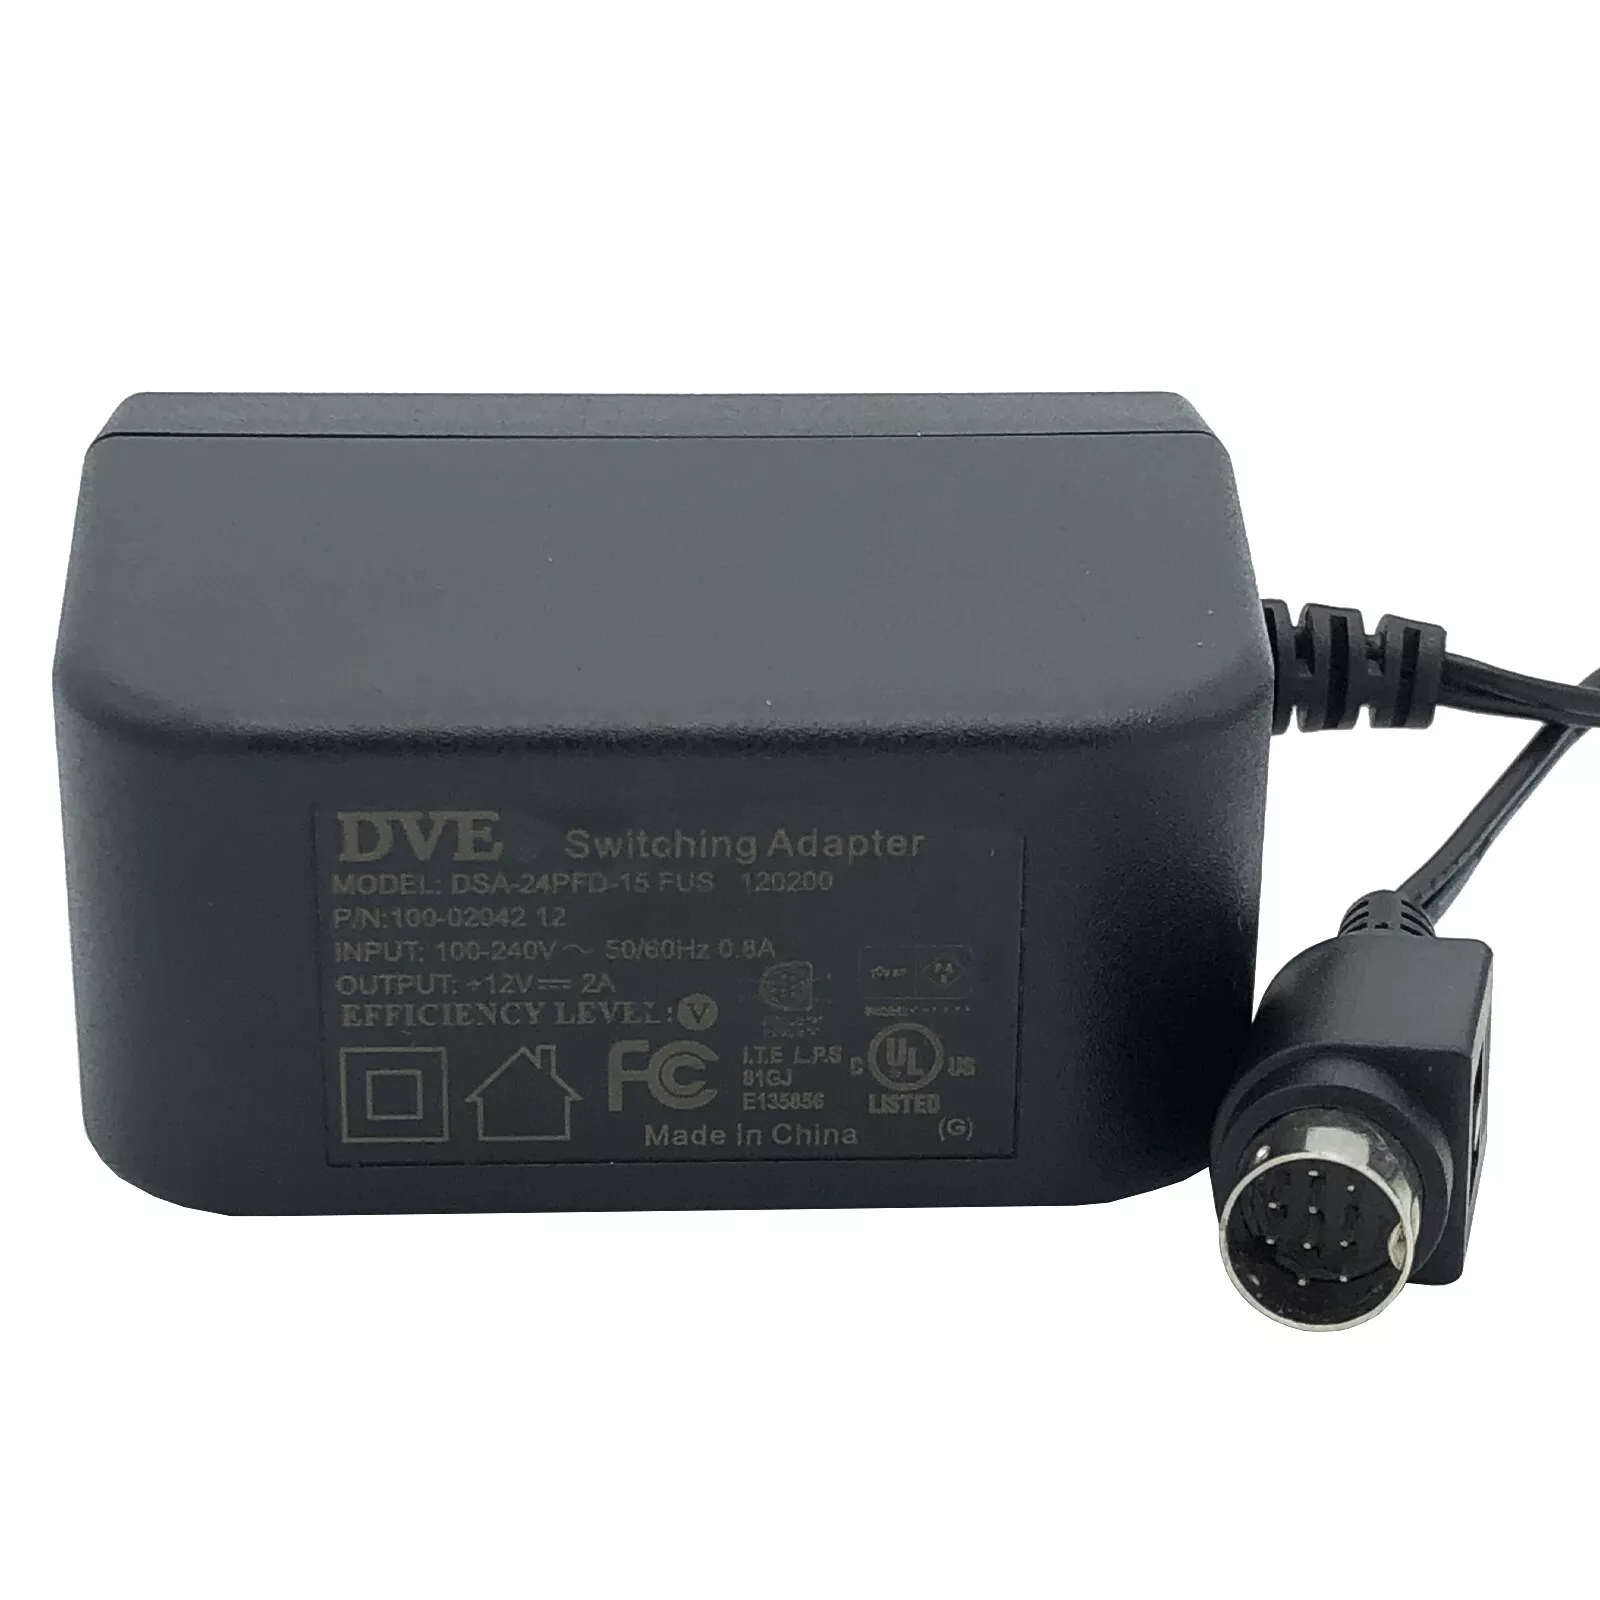 *Brand NEW*Genuine DVE +12V 2A 24W Switching AC Adapter Model DSA-24PFD-15 FUS 120200 Power Supply